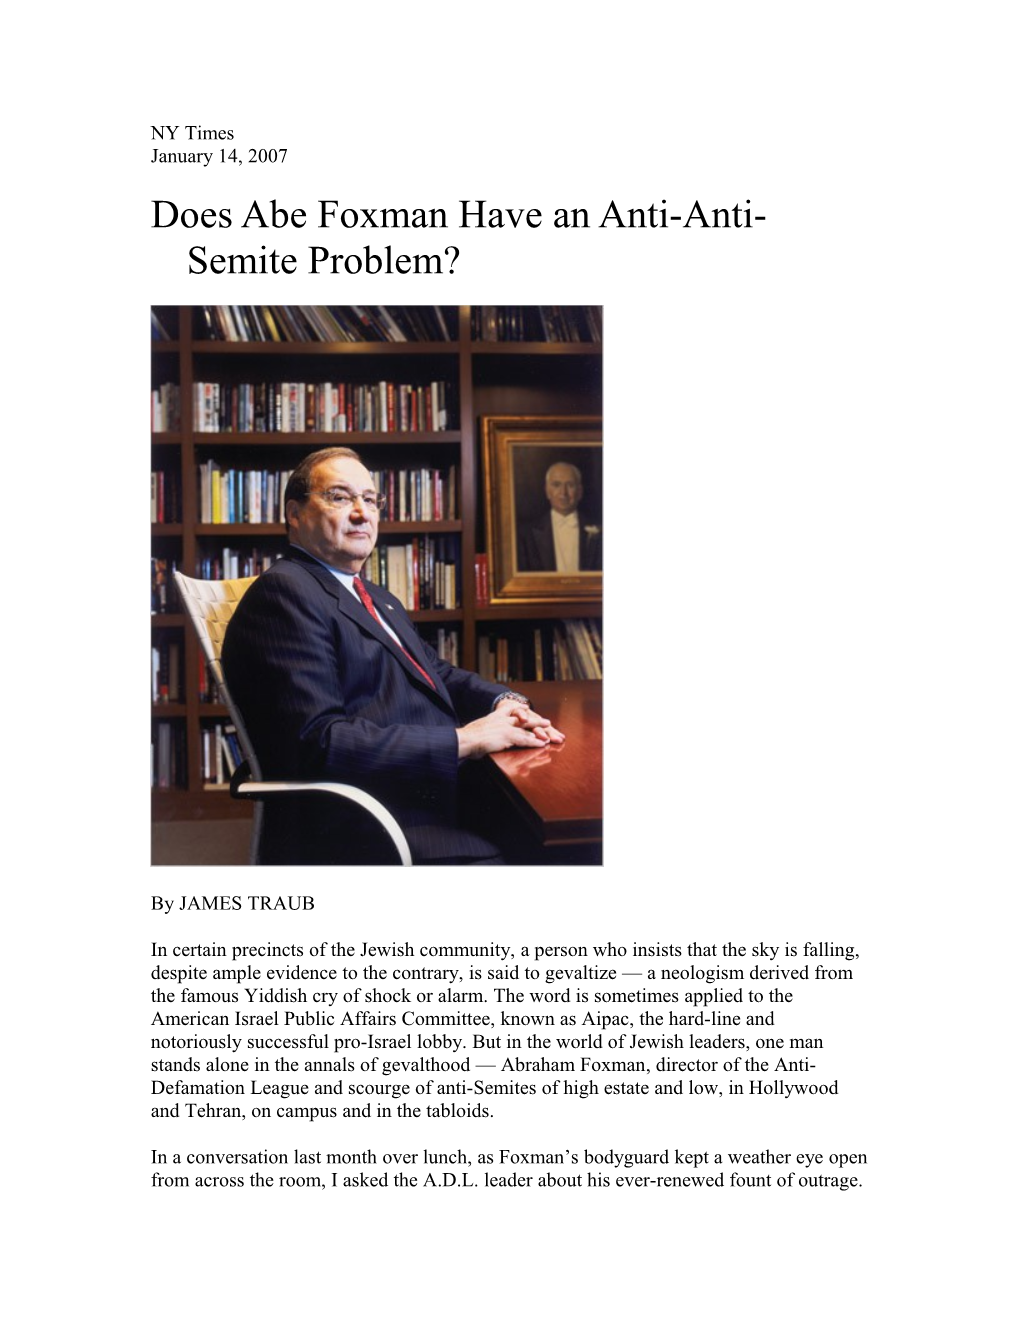 Does Abe Foxman Have an Anti-Anti-Semite Problem?